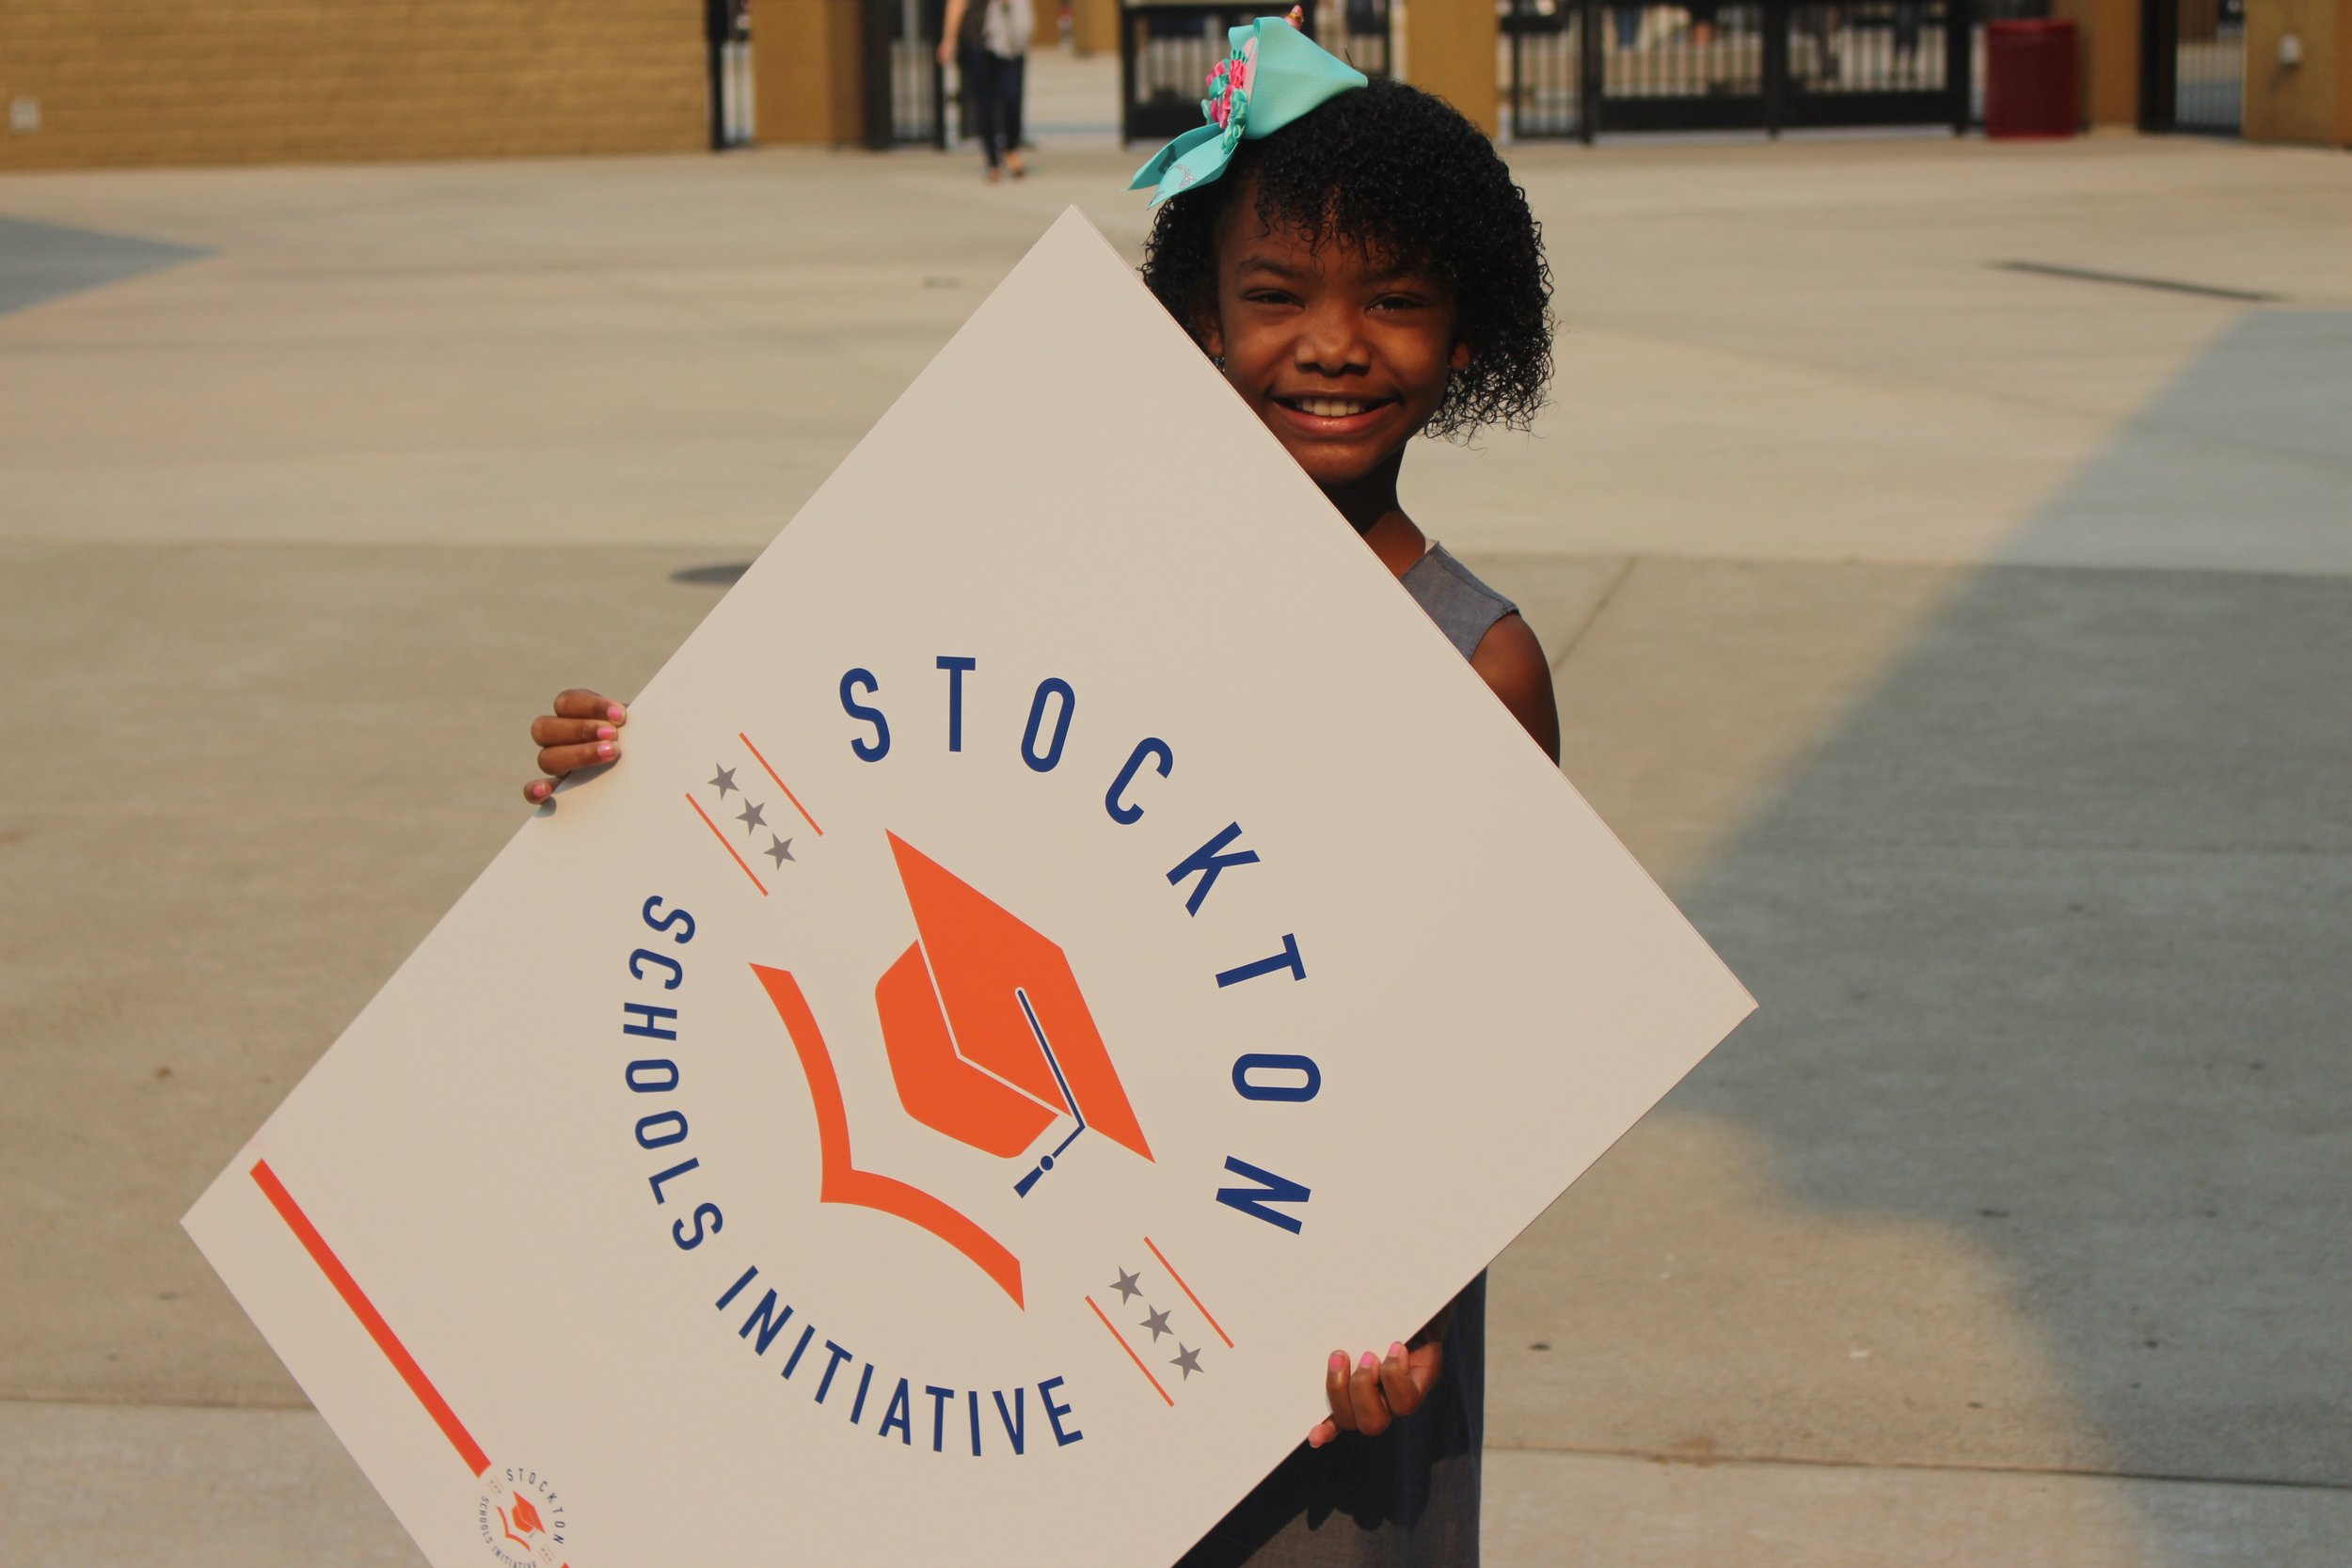 child with Stkn Sch Initiative logo.jpg